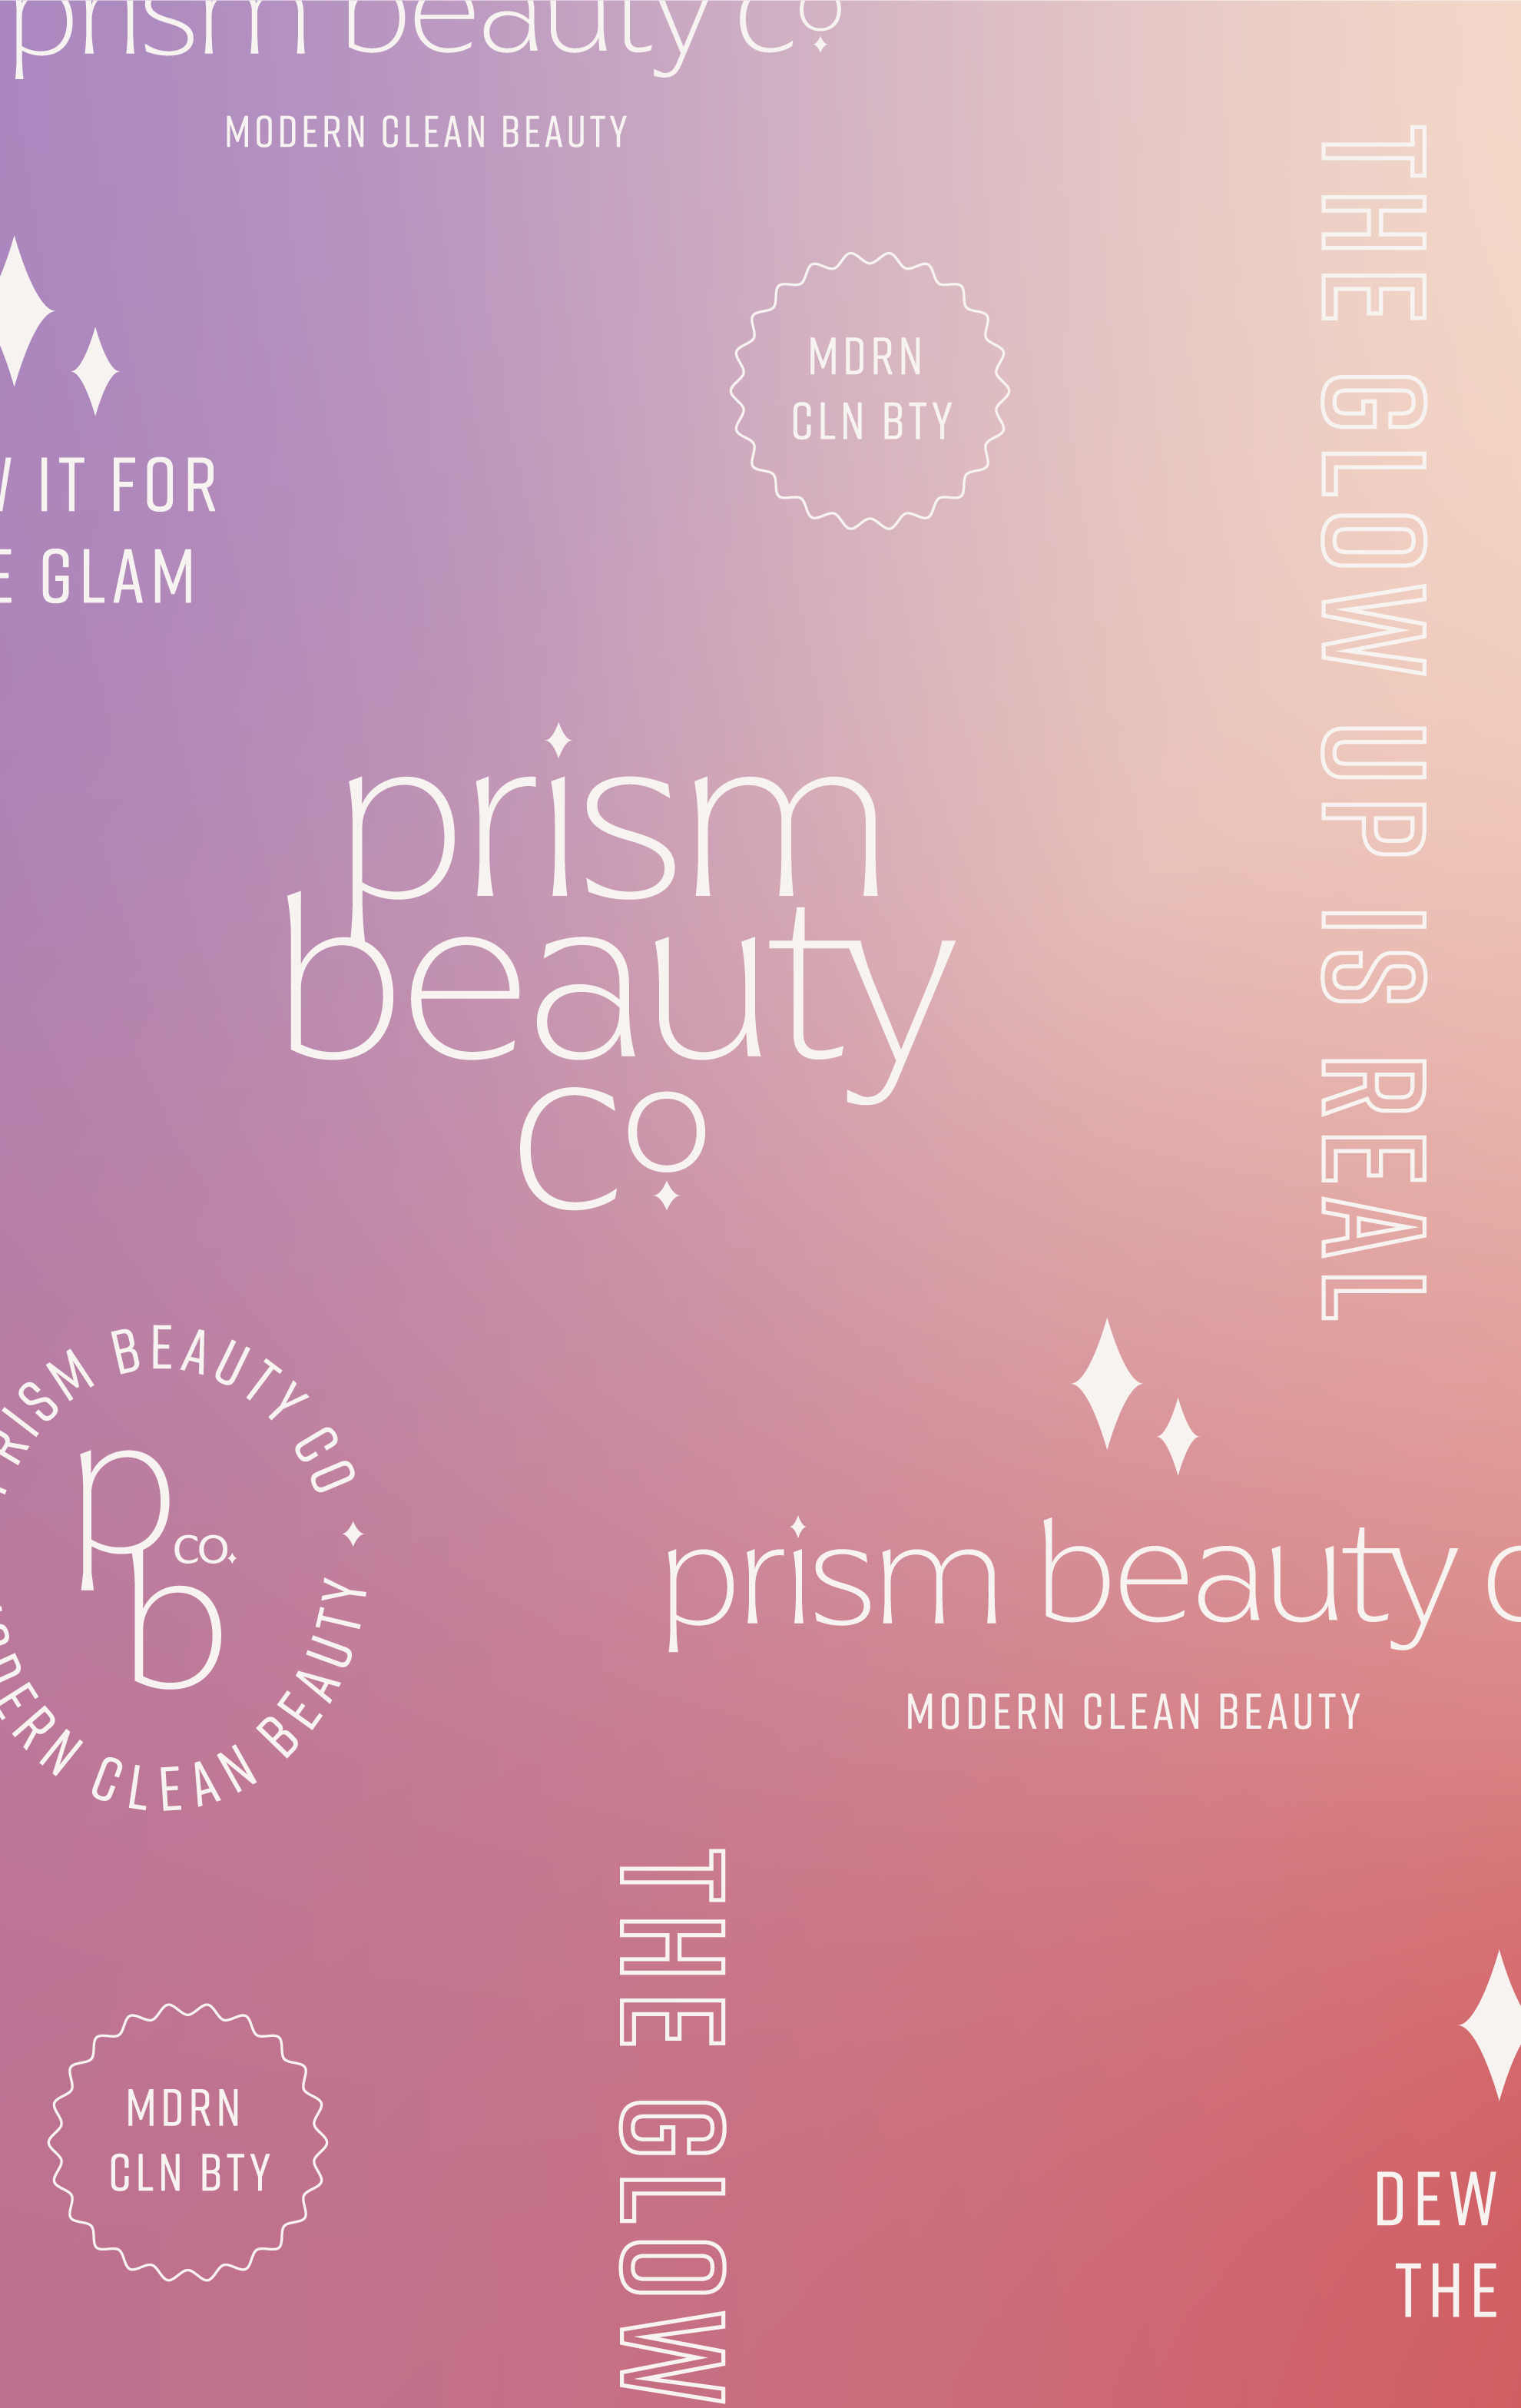 Prism Beauty Co. Logos